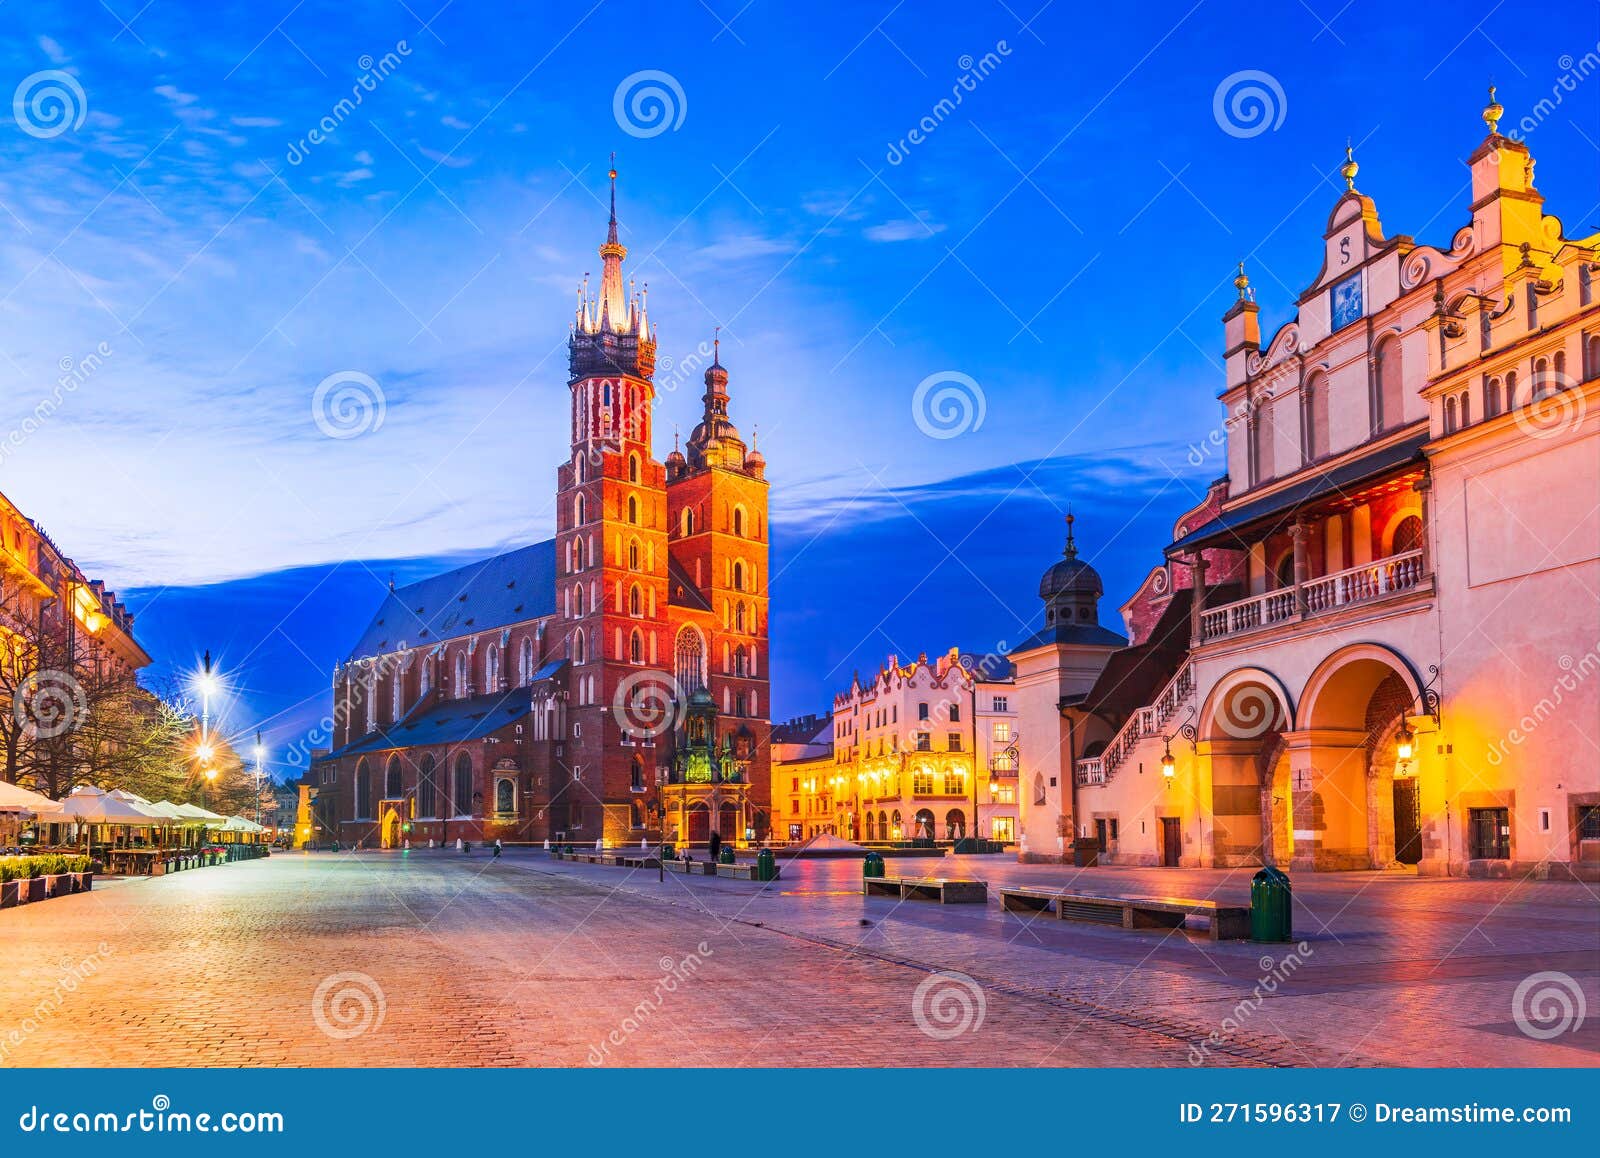 krakow, poland - gothic beauty and historic charm shine at cracovia's night scene